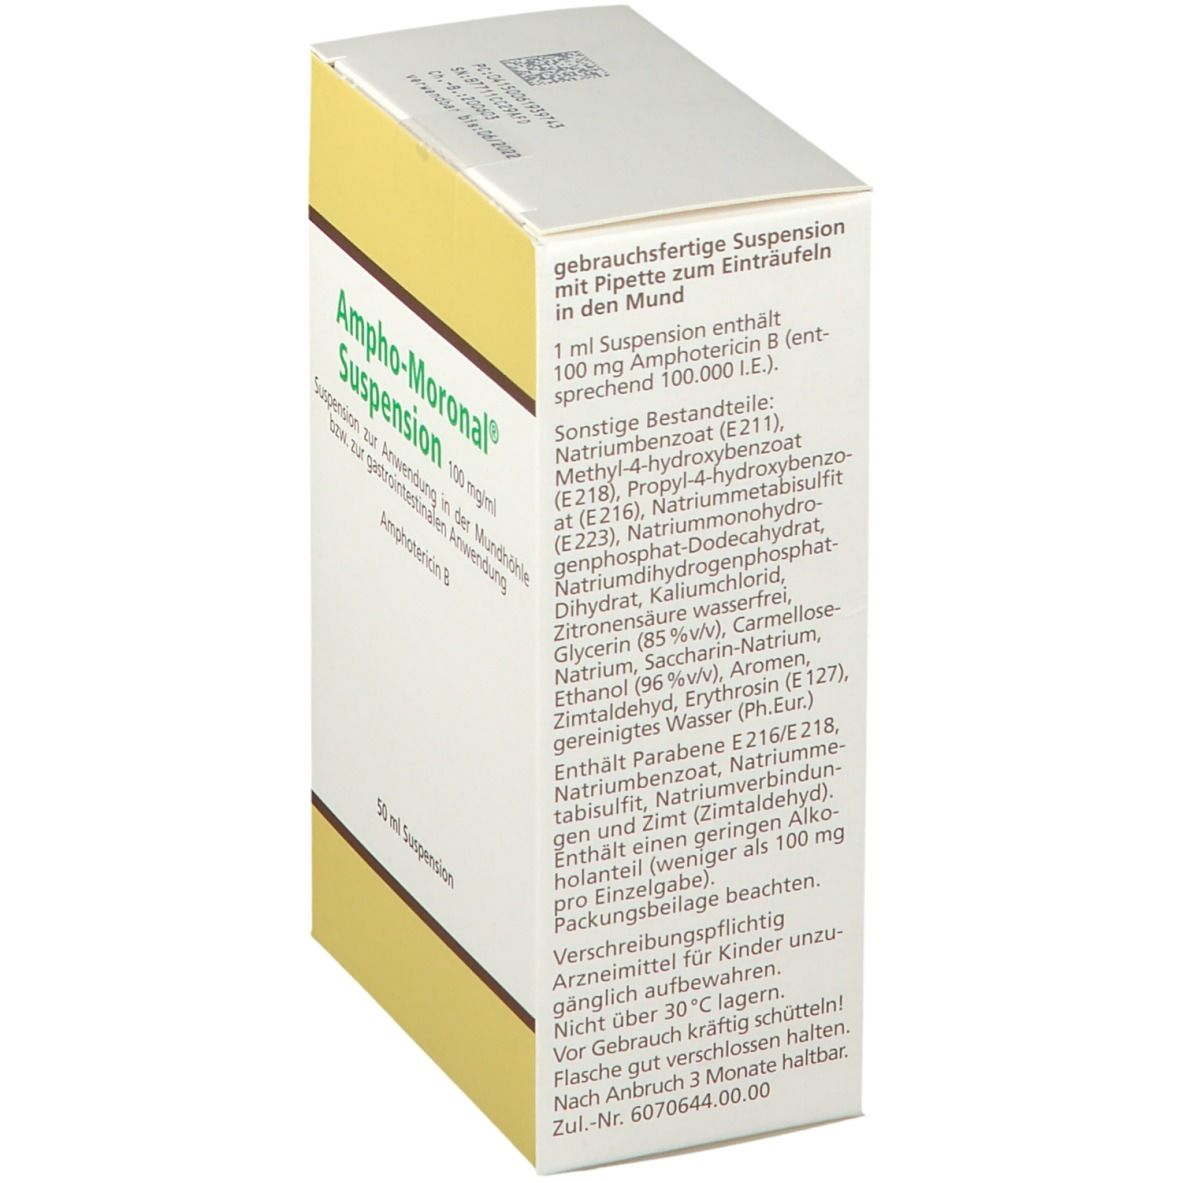 Ampho-Moronal® 100 mg/Ml